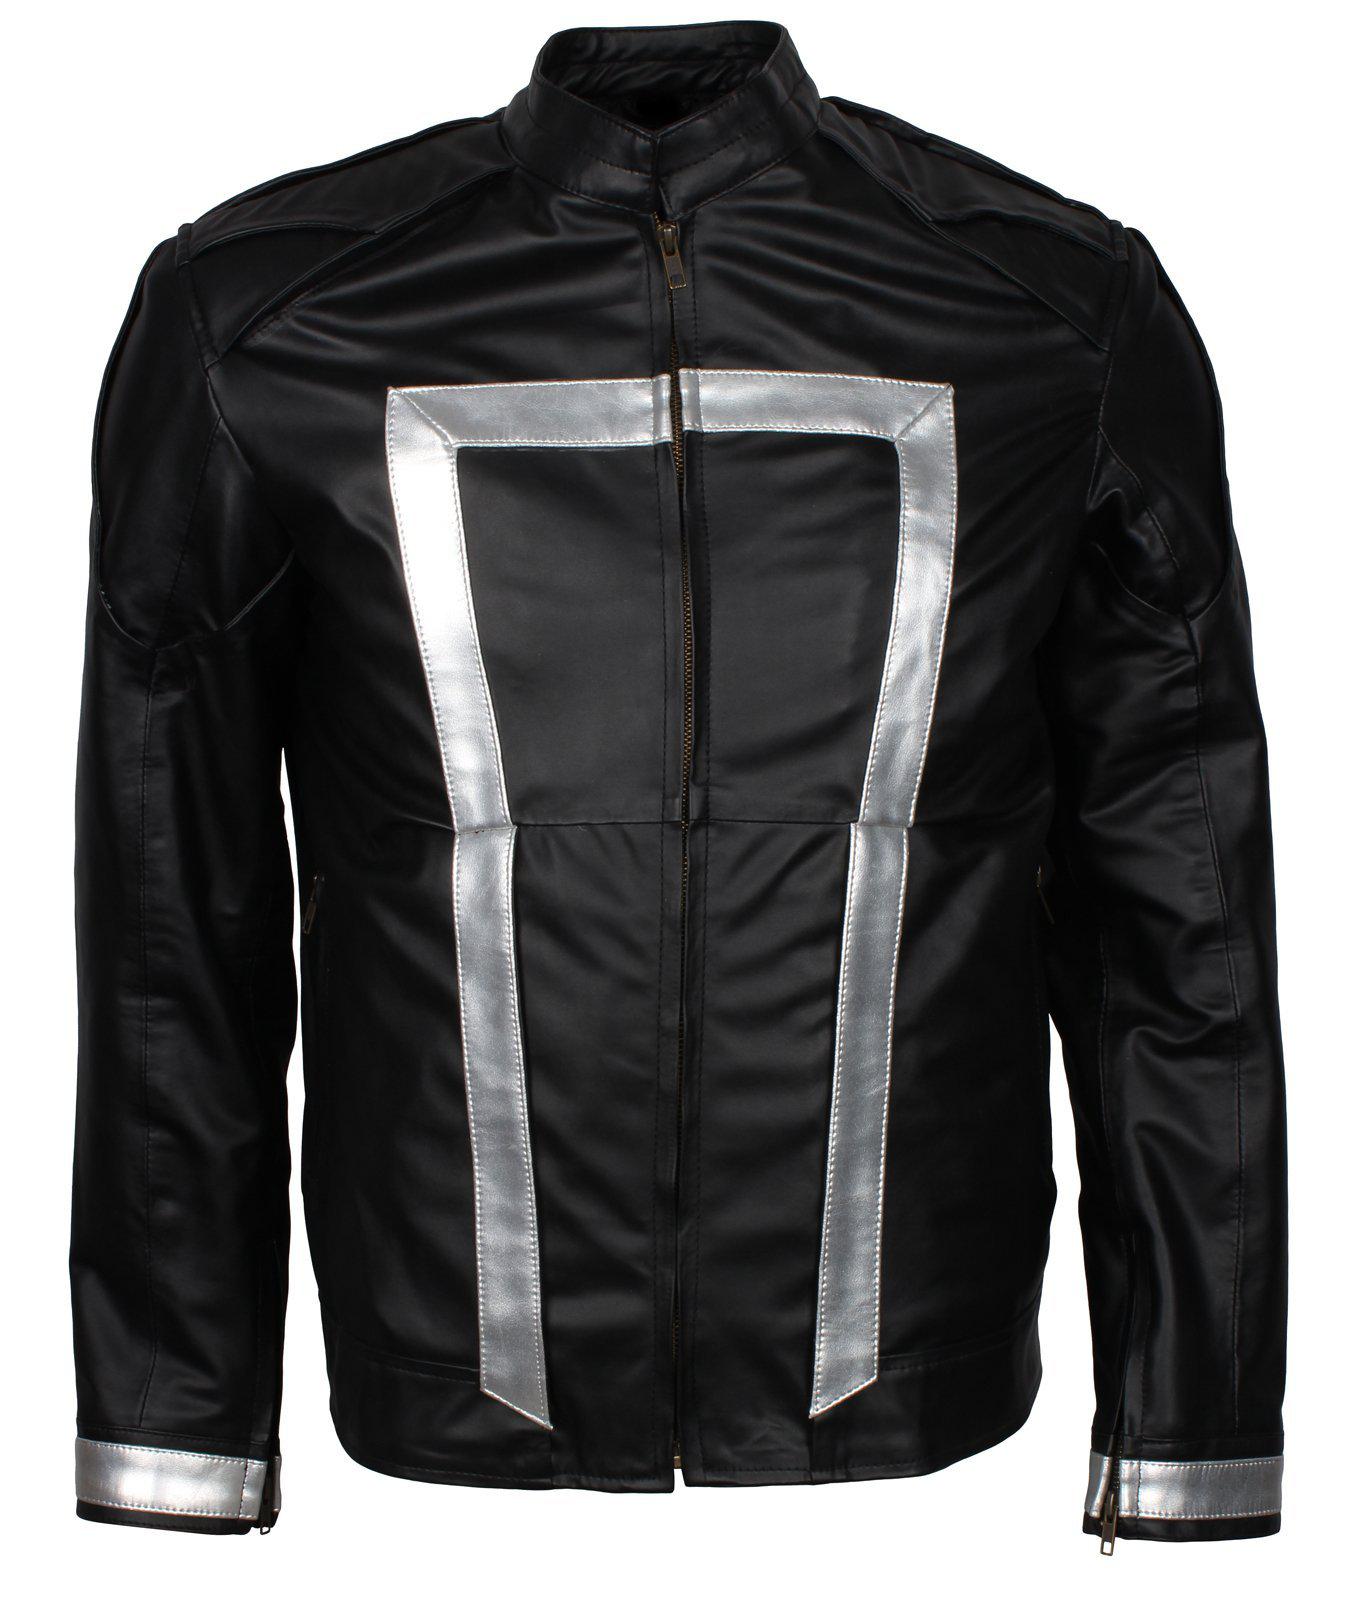 ghost rider motorcycle jacket